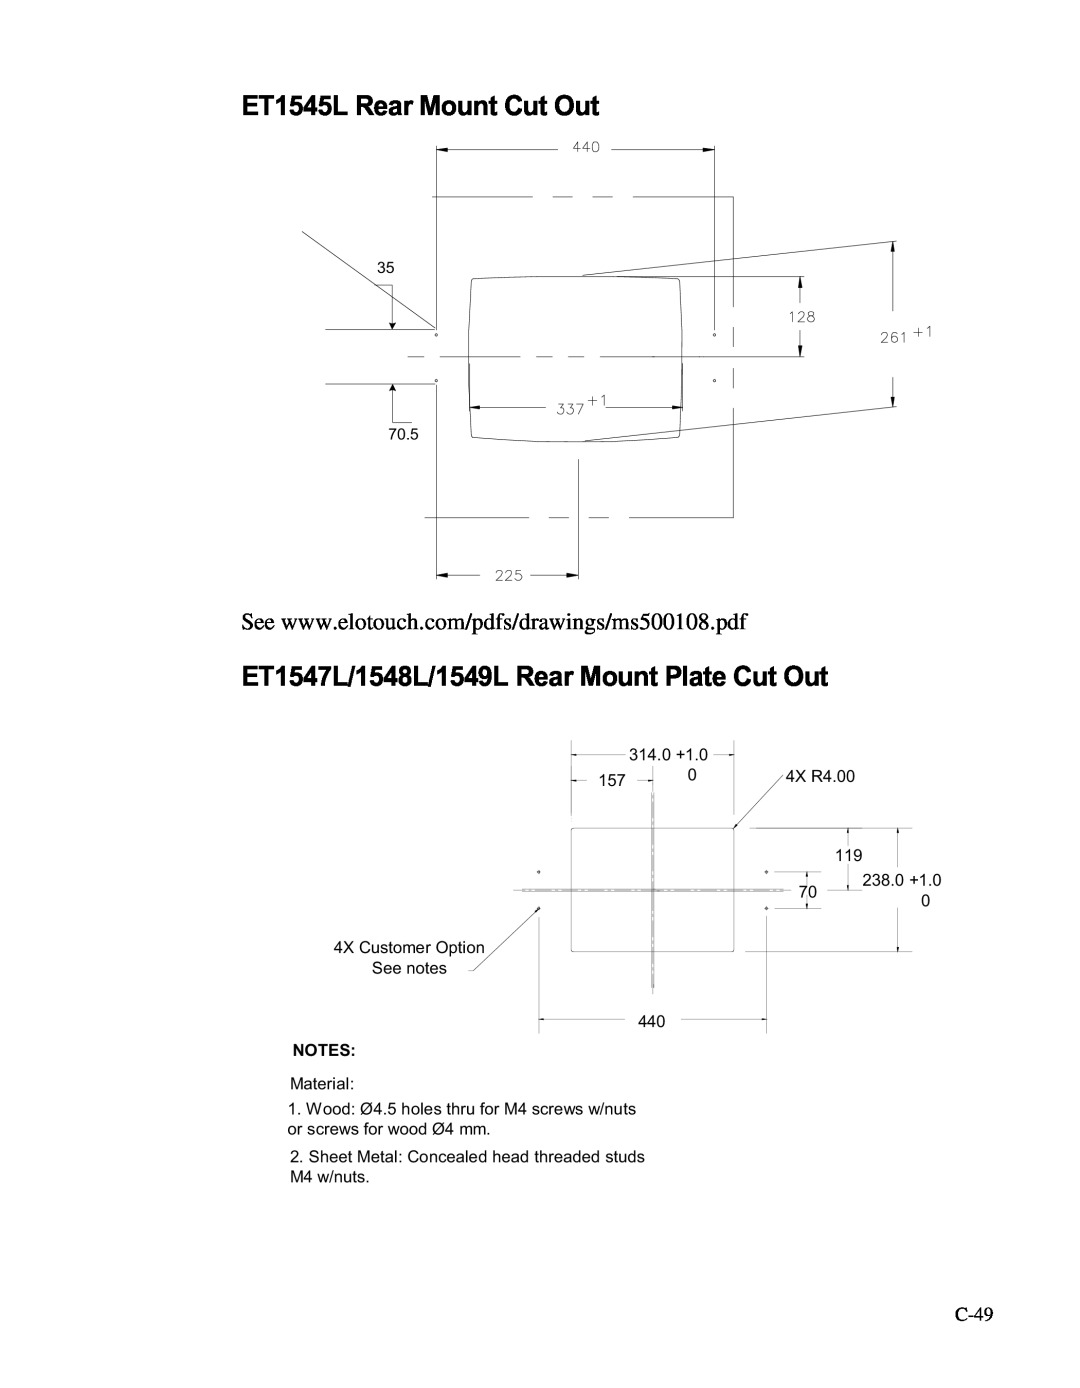 Elo TouchSystems LCD manual ET1545L Rear Mount Cut Out, ET1547L/1548L/1549L Rear Mount Plate Cut Out, C-49, 5##%0 0,*%&56 